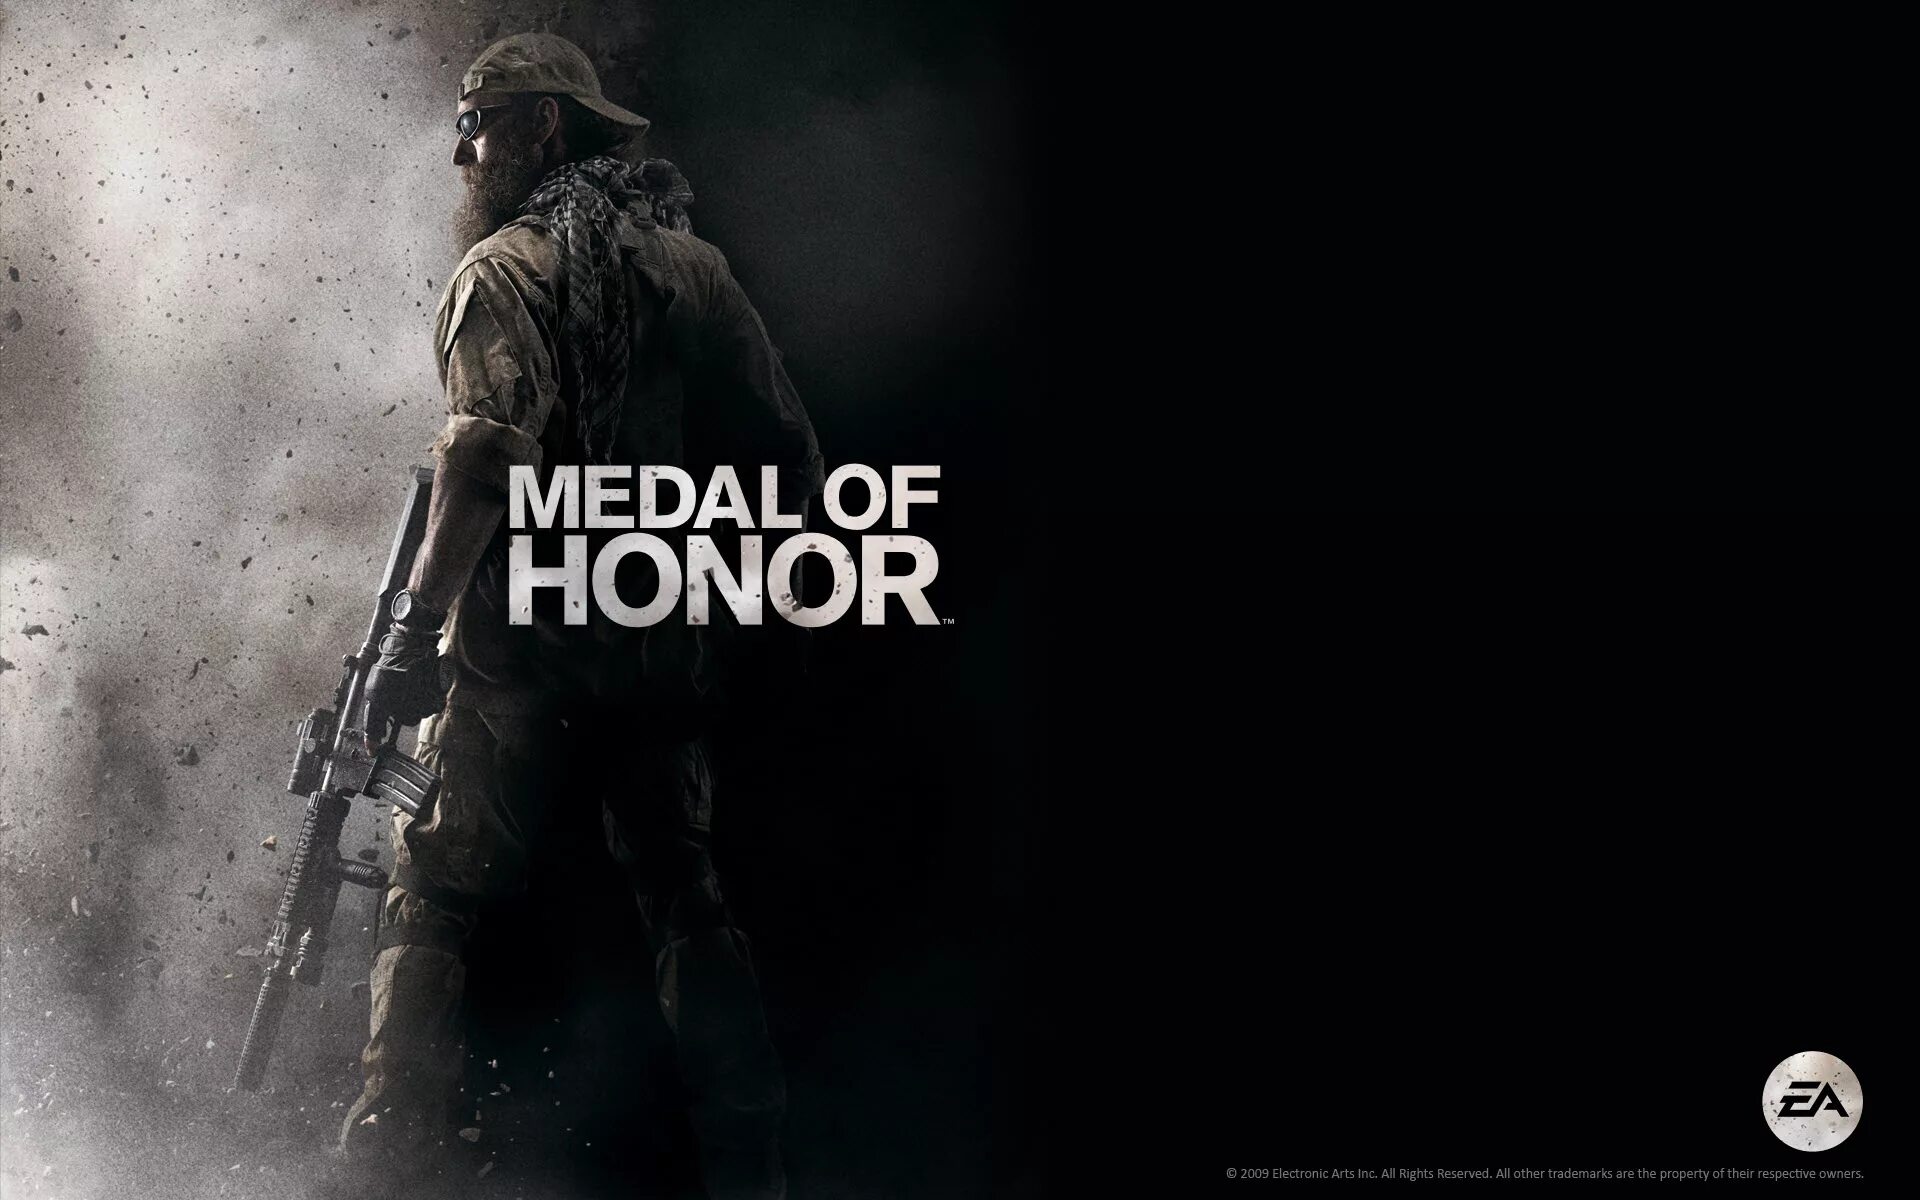 Игра Medal of Honor Warfighter. Медаль оф хонор 2010 обои. Медаль за отвагу игра 2010. Игры Medal of Honor 2010 Limited. Medal of honor edition